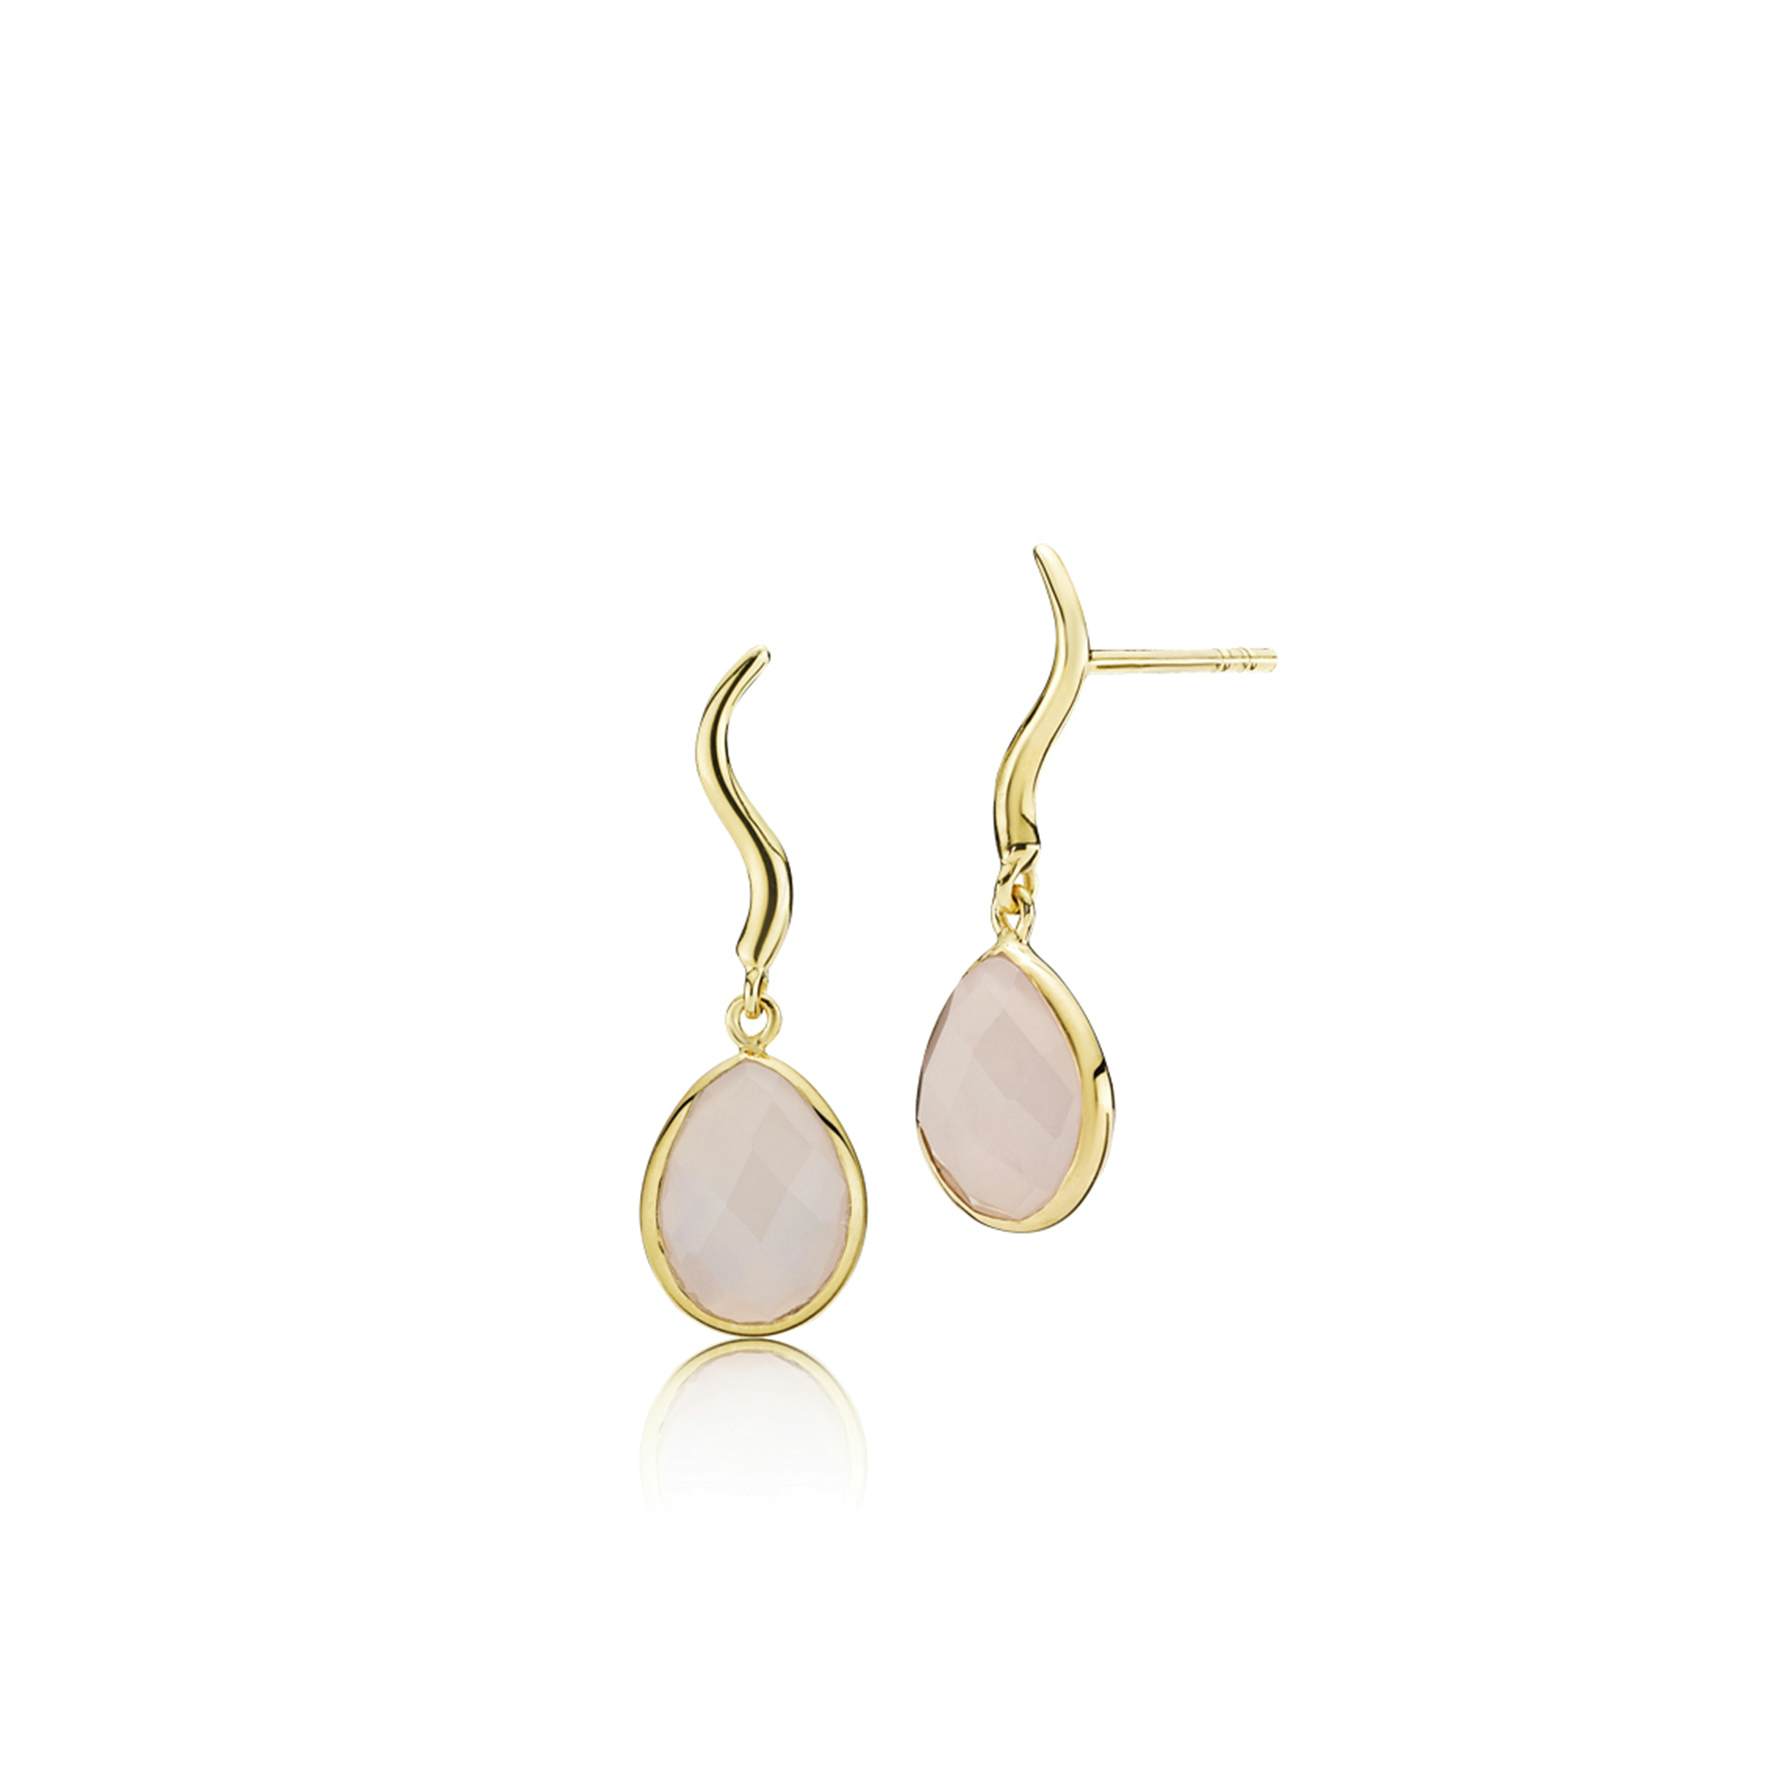 Marie Pink Earrings von Izabel Camille in Vergoldet-Silber Sterling 925